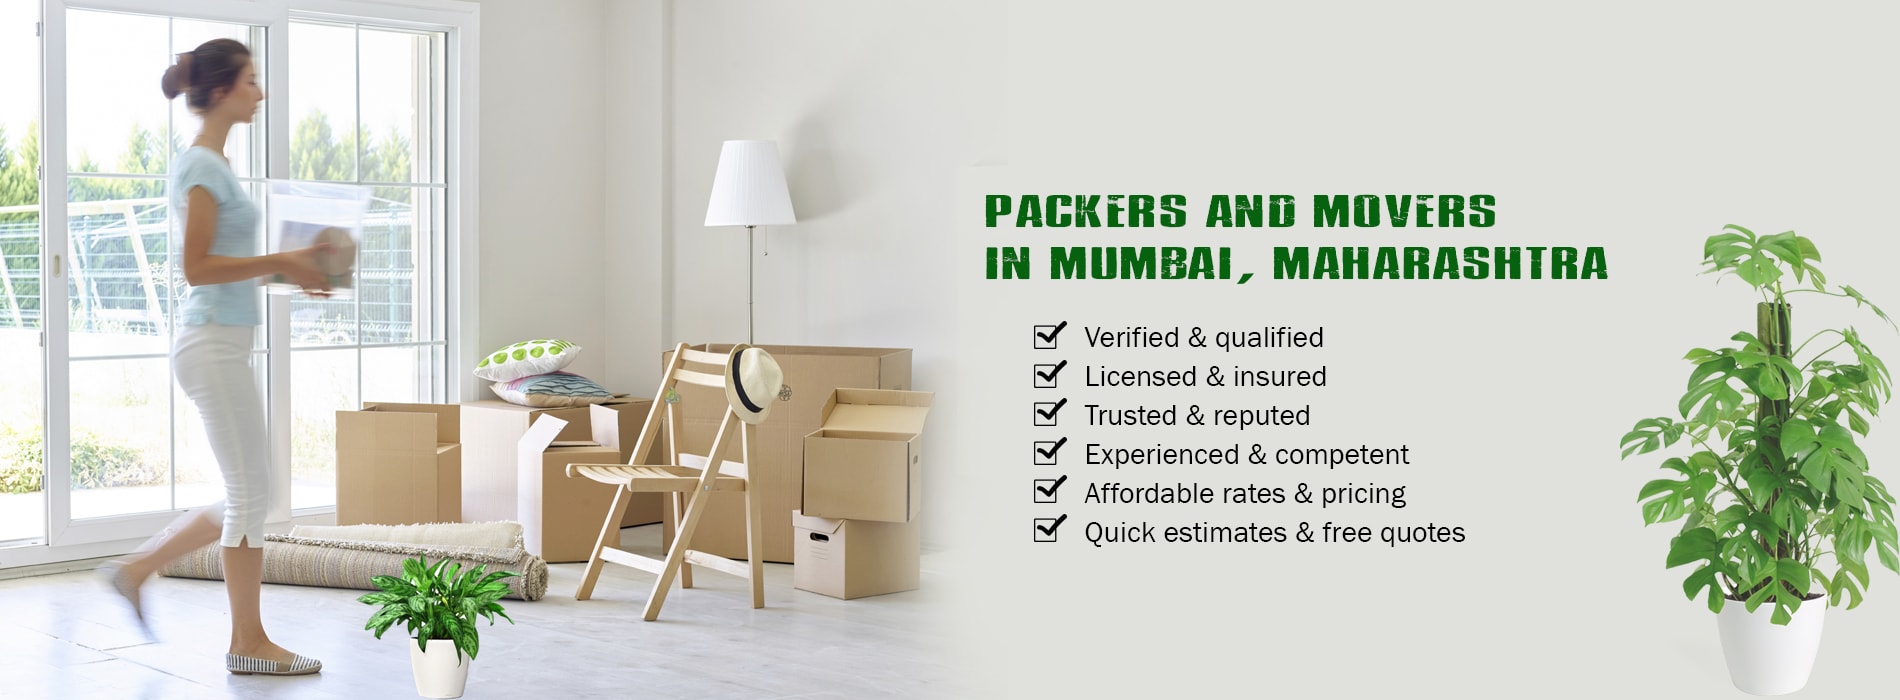 Packers And Movers Mumbai